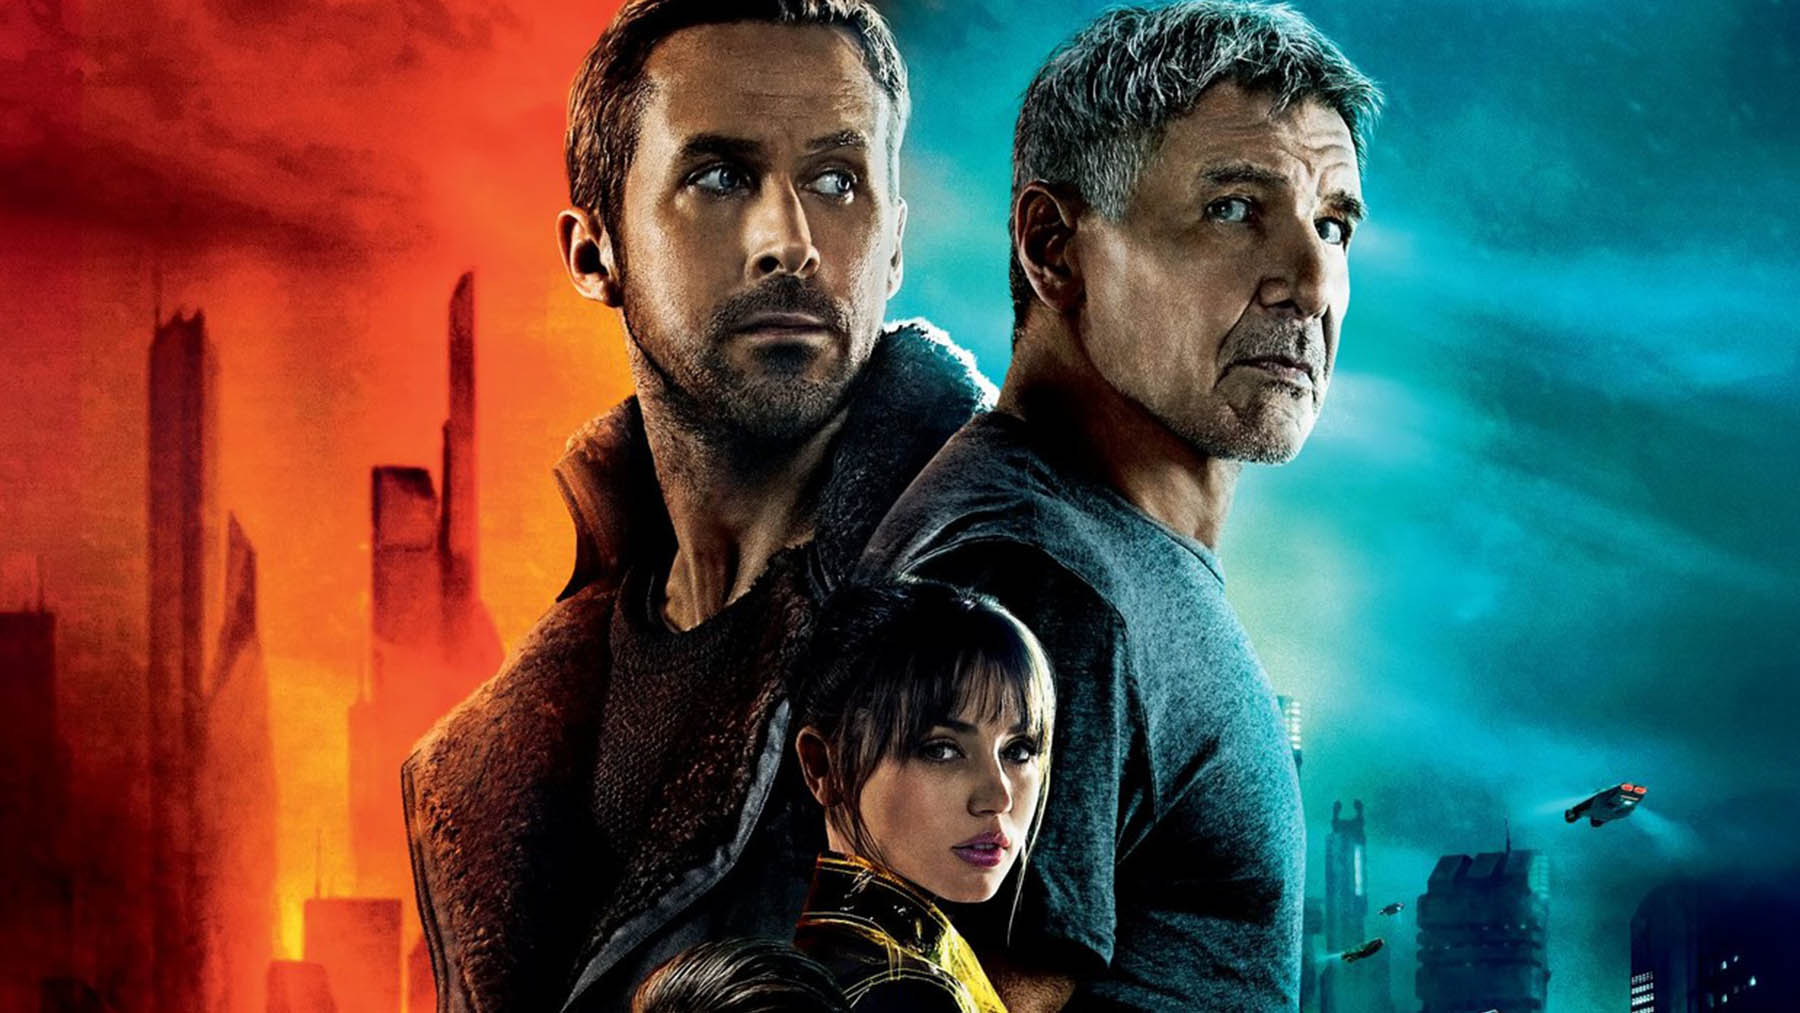 ‘Blade Runner 2049’ (Warner Bros Pictures)